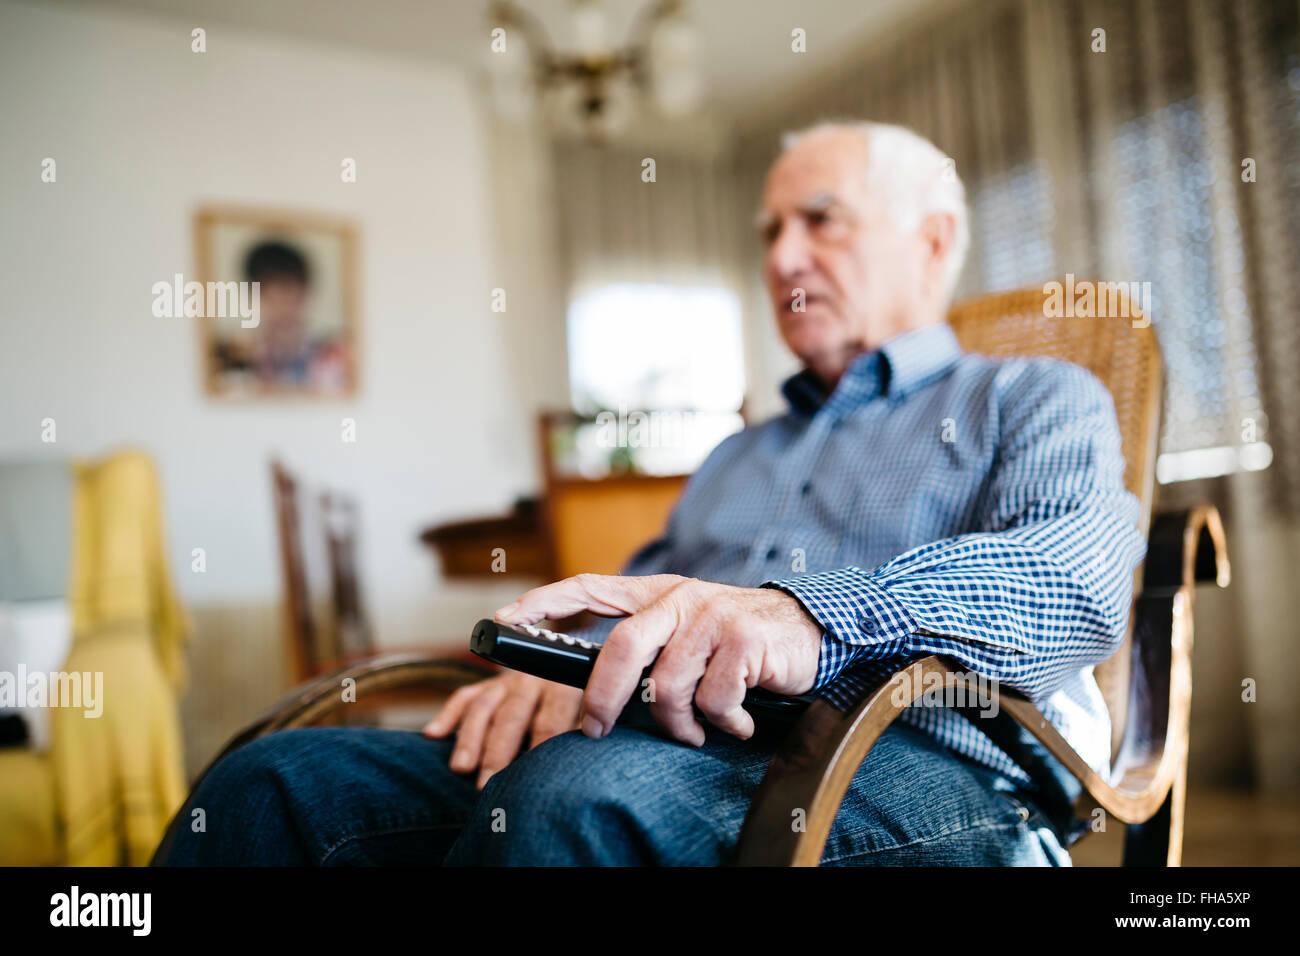 Hand of senior man holding remote control, close-up Stock Photo